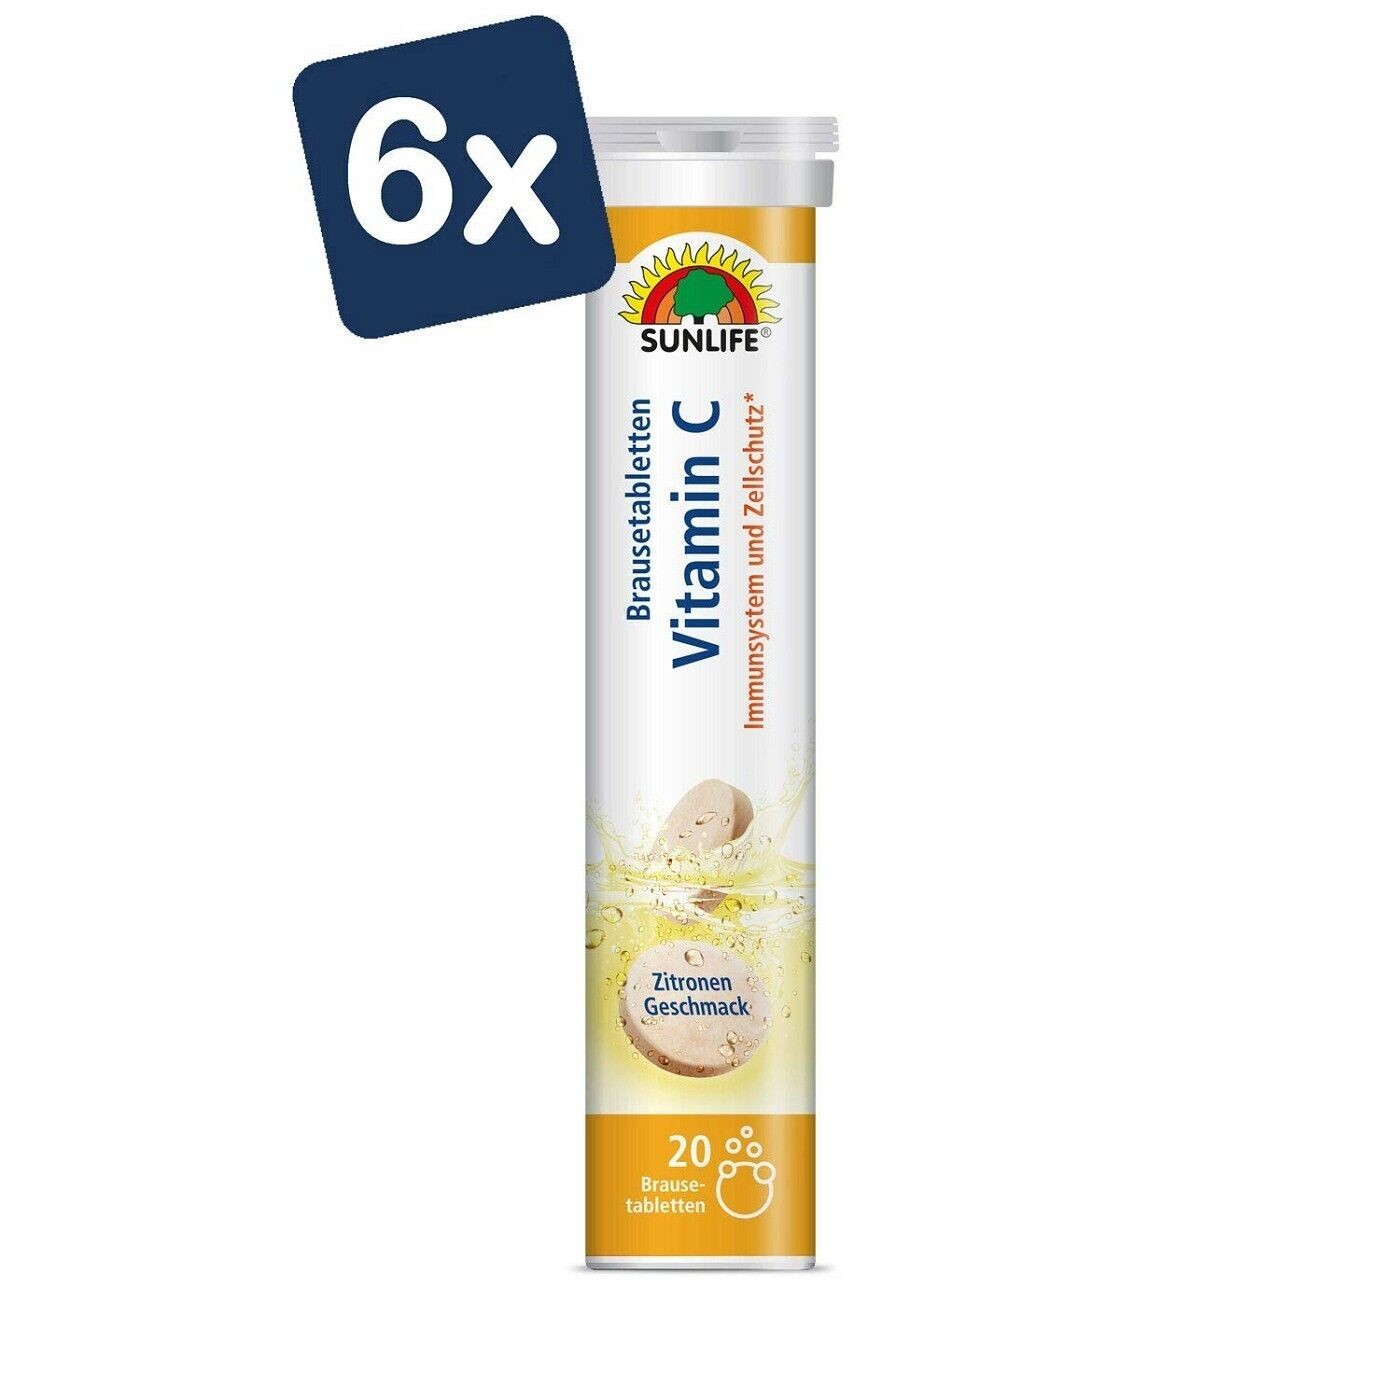 Sunlife Vitamin C Brausetabletten 6x20 Stück 6er-Pack Bundle